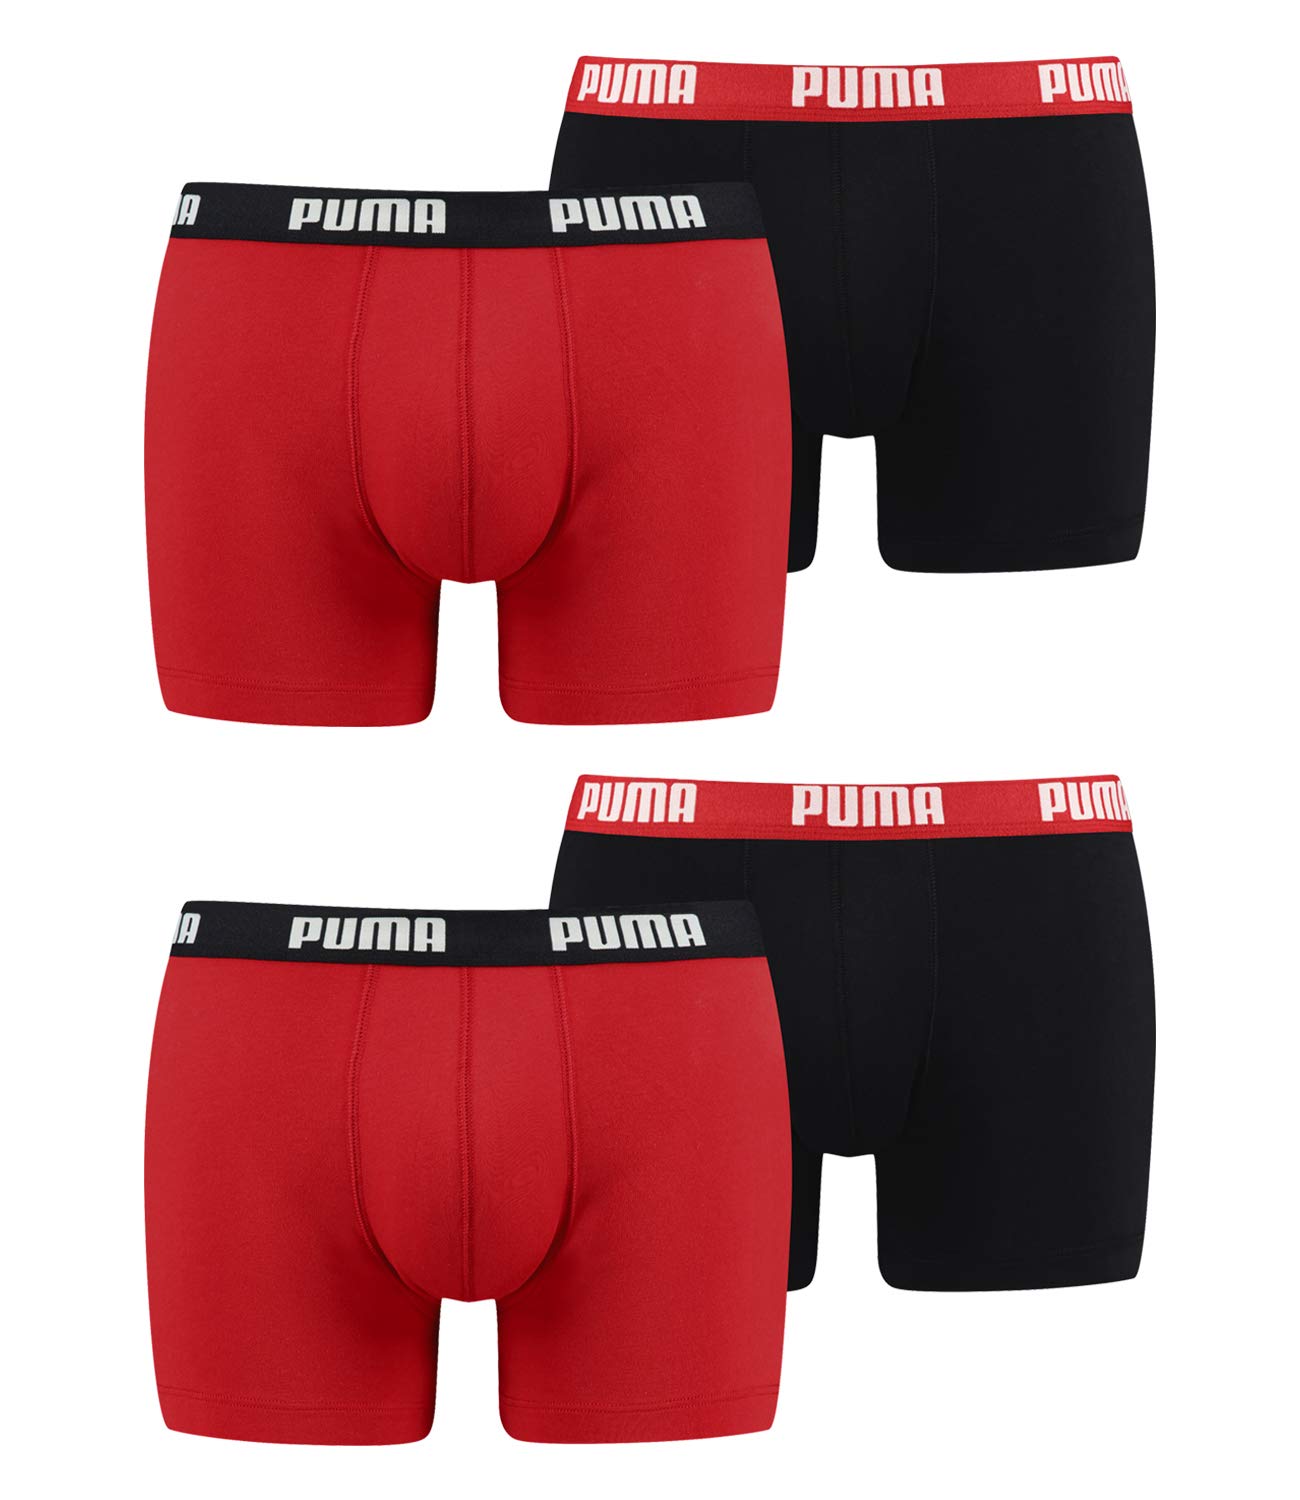 PUMA Herren Basic Boxershorts, Red/Black, L